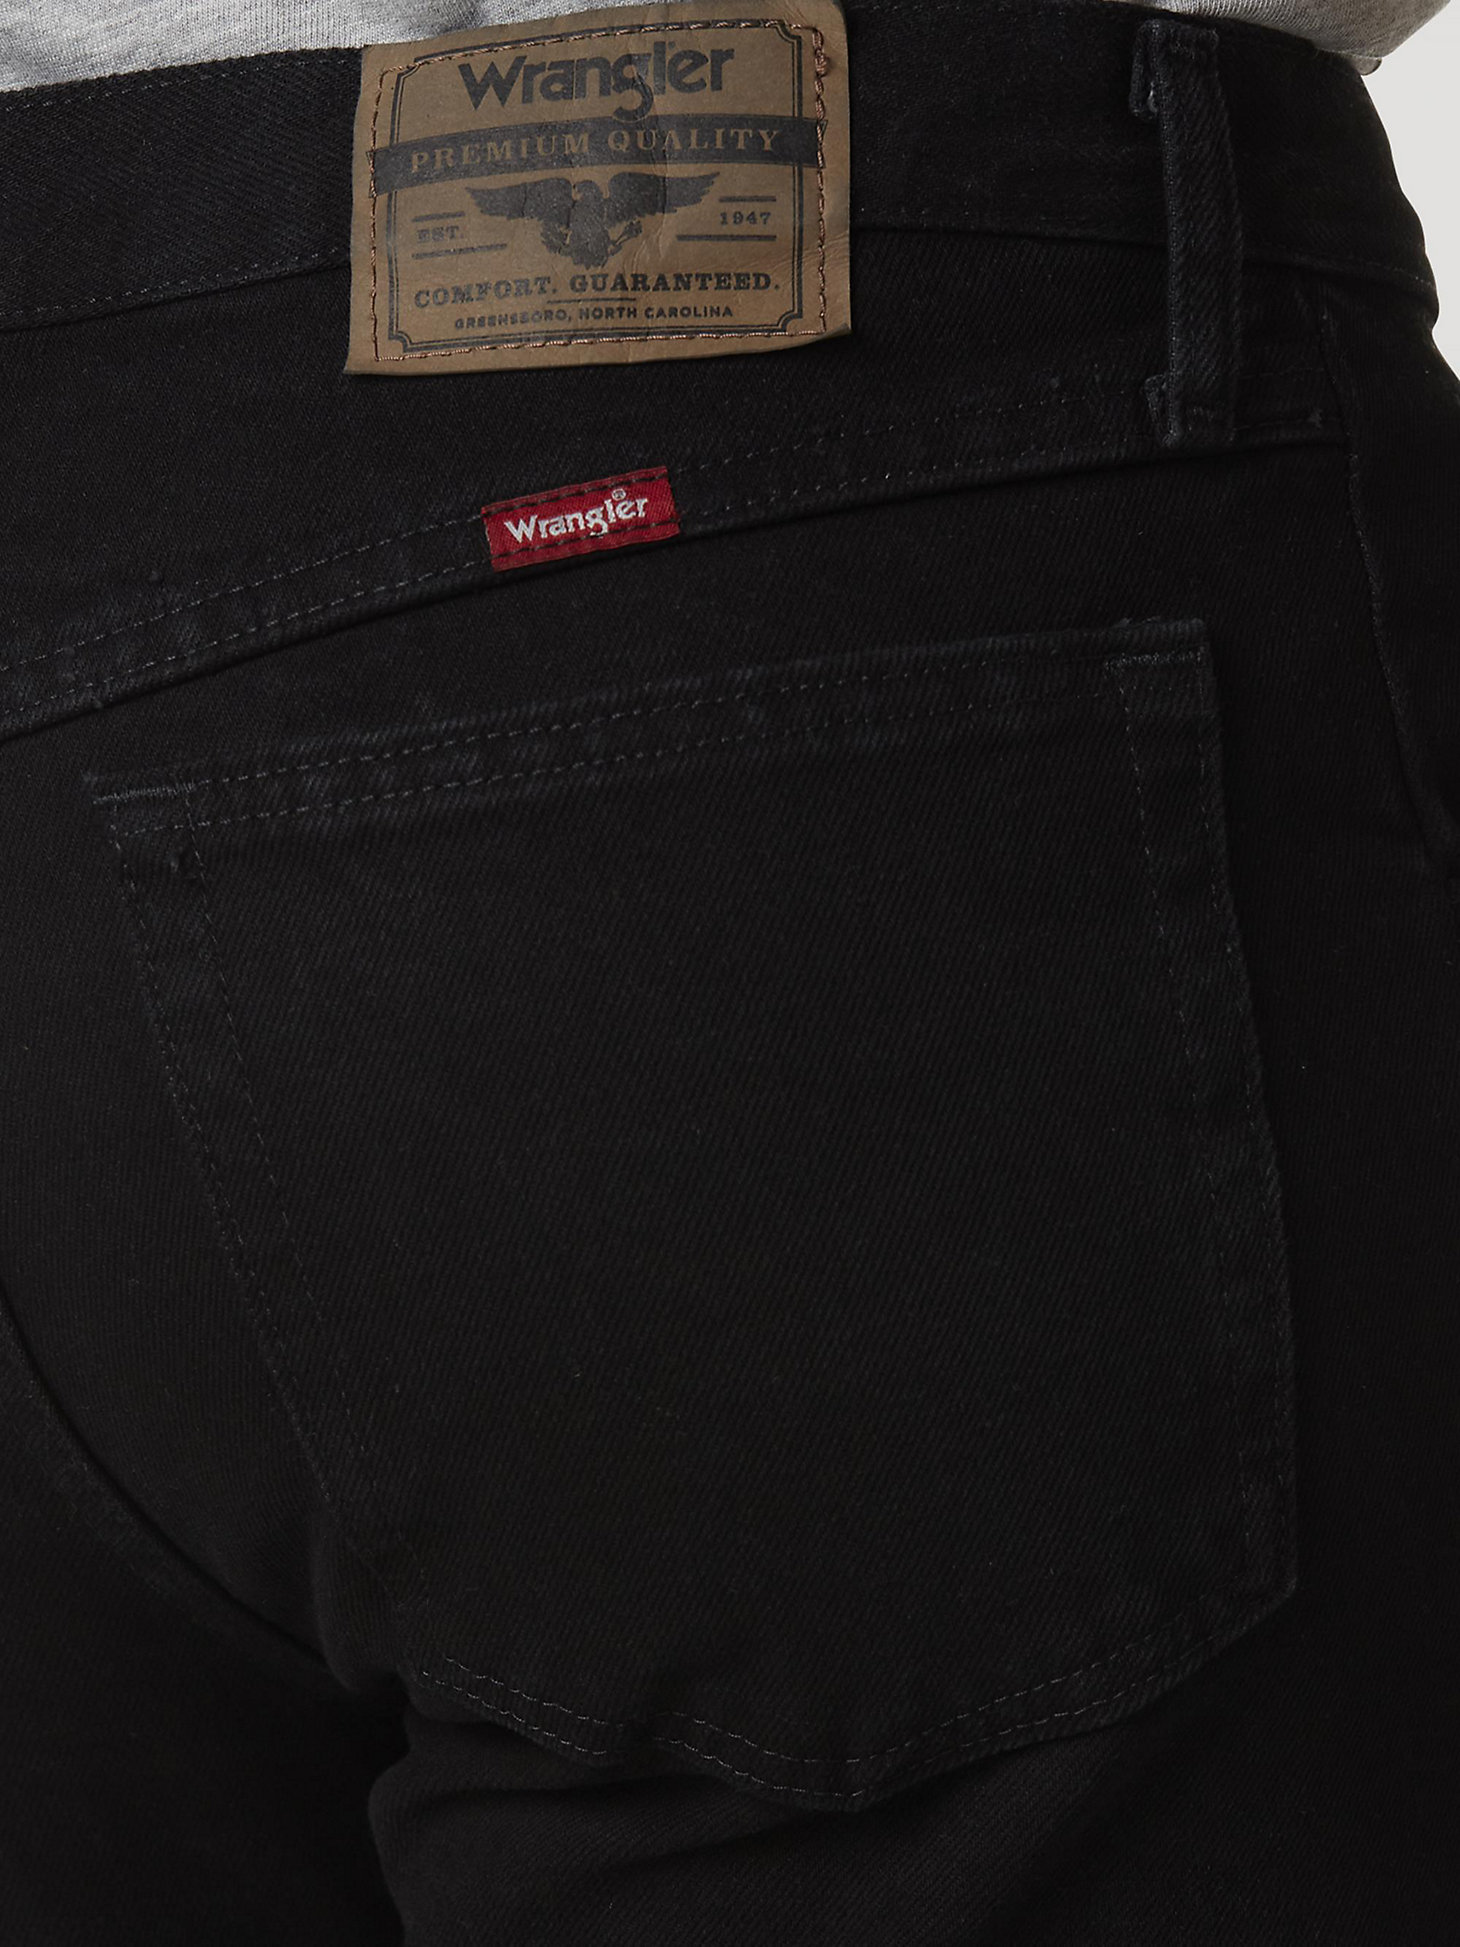 Wrangler® Five Star Premium Denim Regular Fit Jean in Coal Black alternative view 4